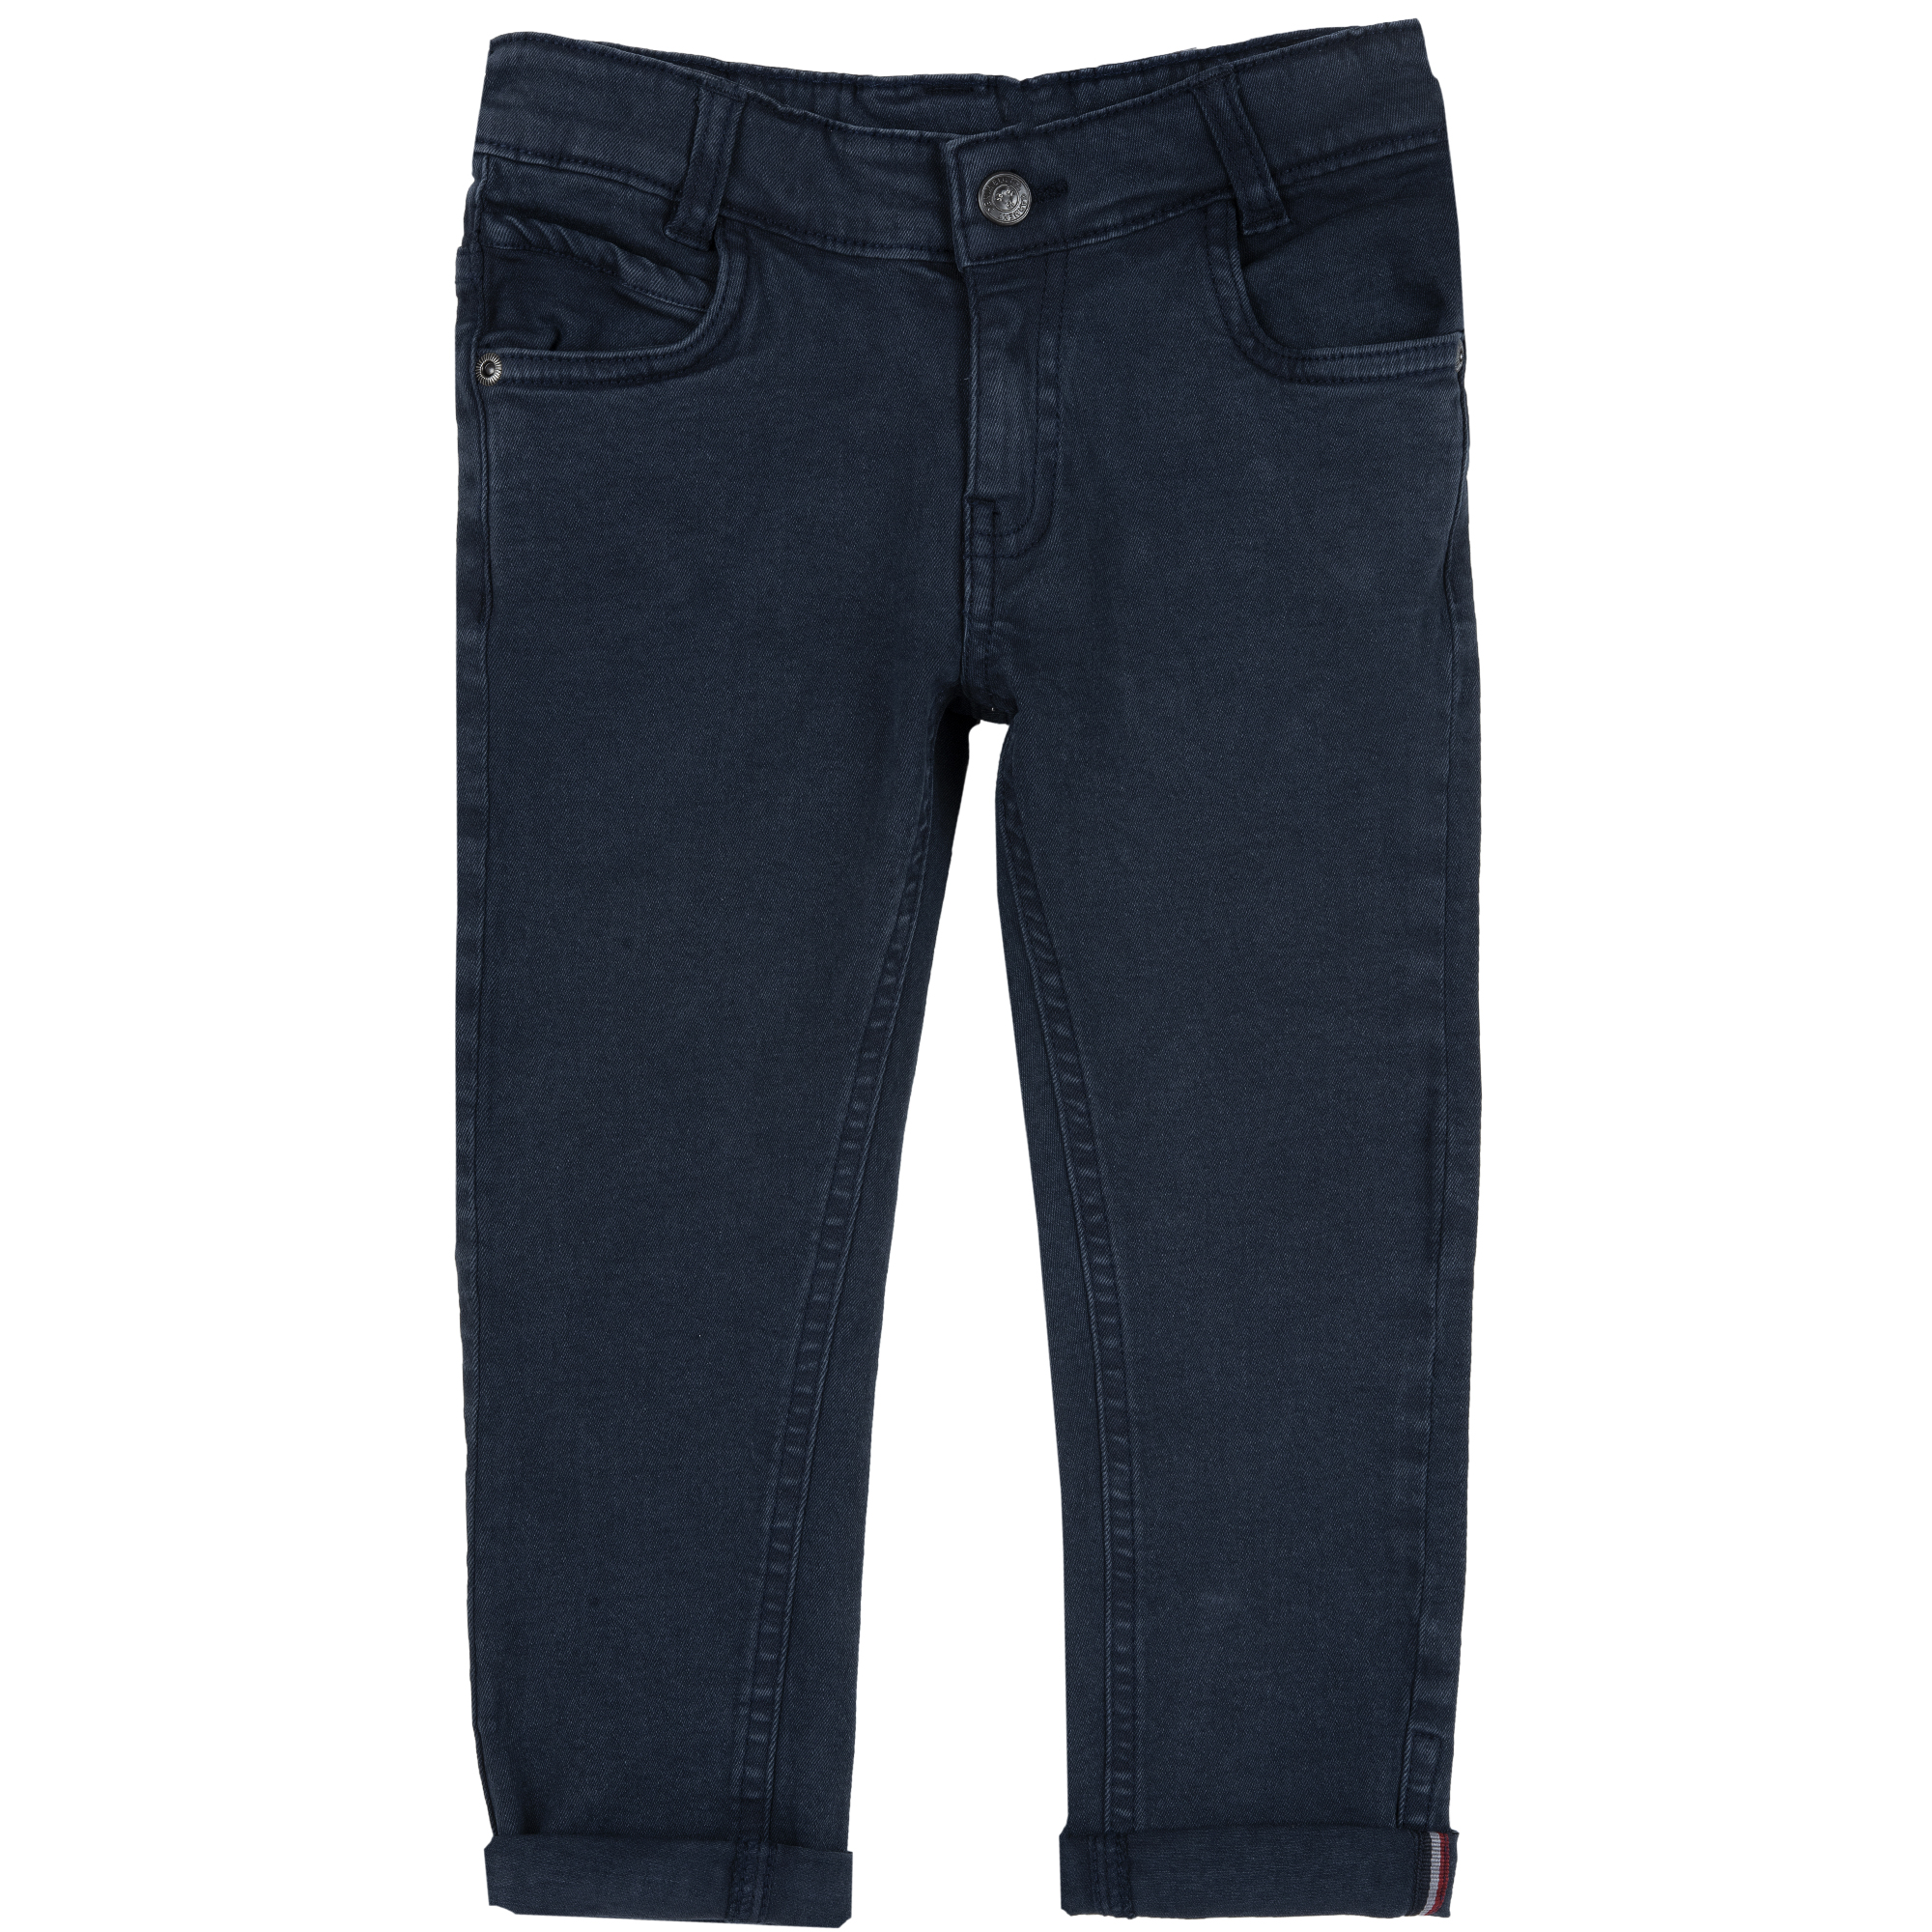 Pantaloni lungi copii Chicco, 08519-61MC, Albastru CHICCO